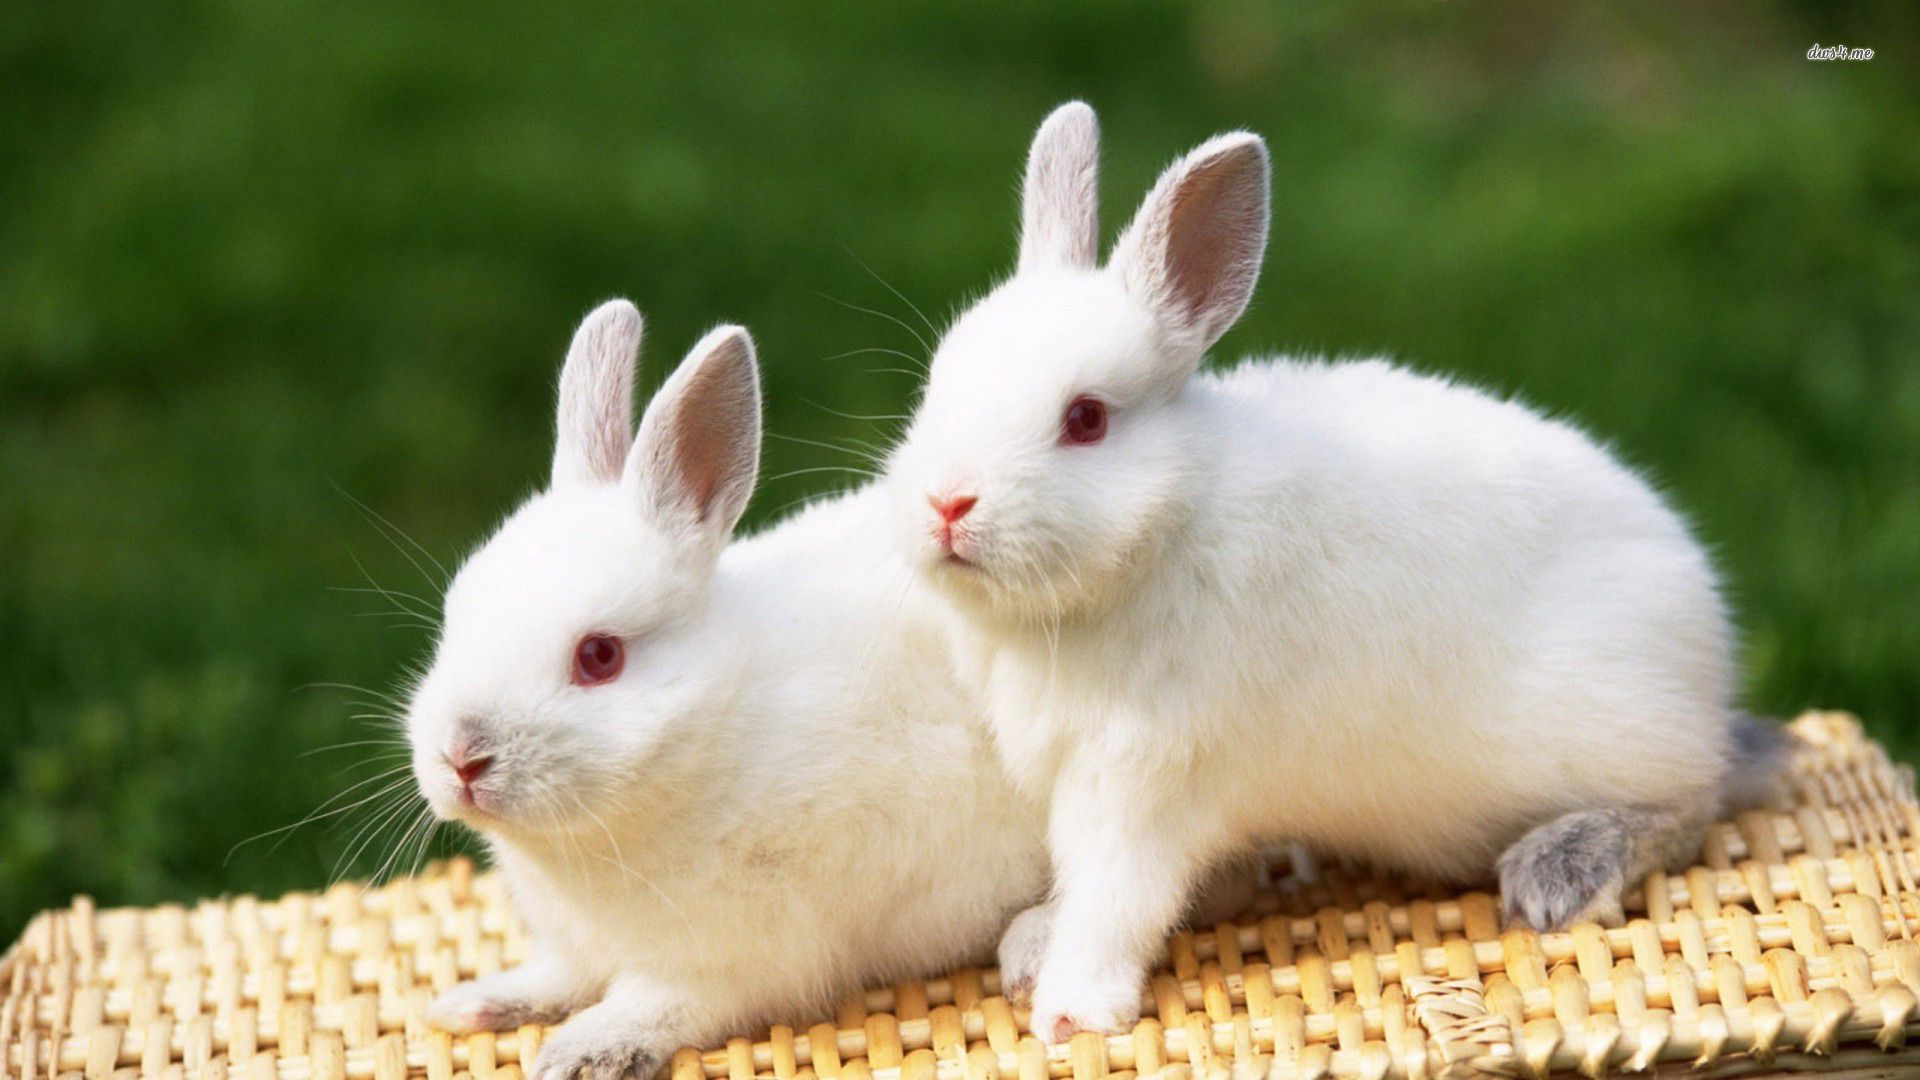 Cute White Rabbit Image 07794